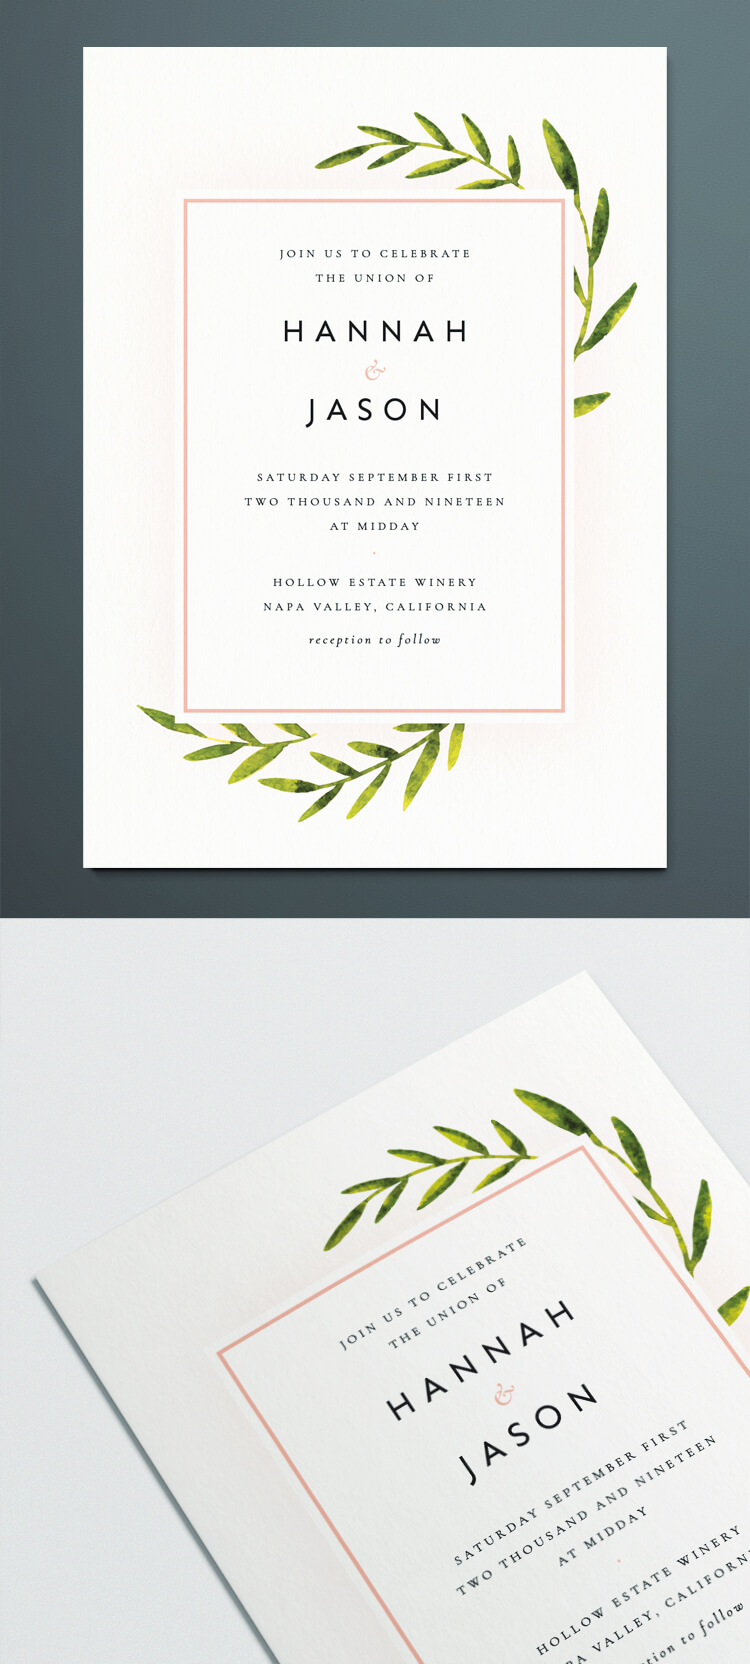 InDesign Wedding Invitation Template with Botanical vintage illustration. Free downloadable design for DIY wedding invite.